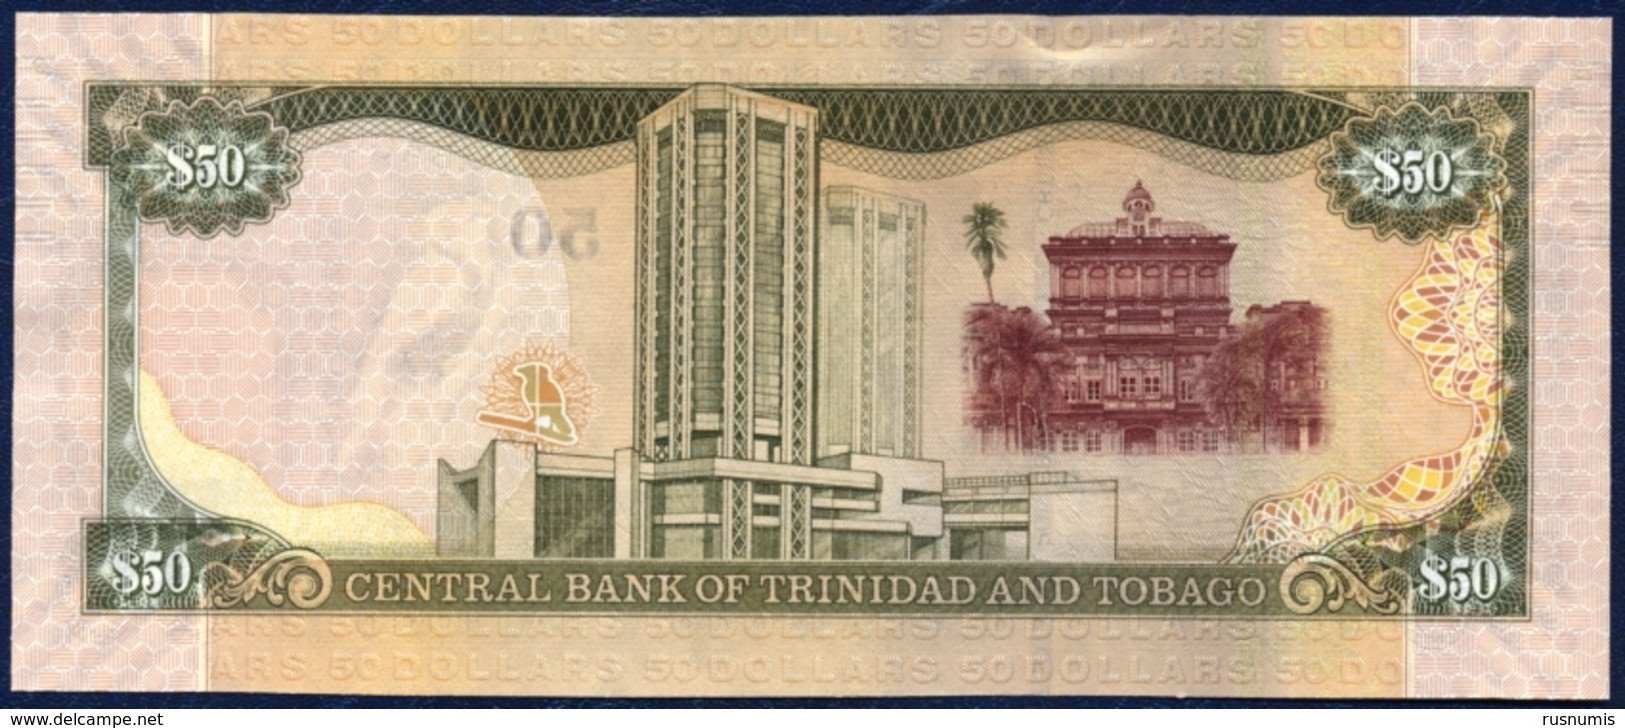 TRINIDAD AND TOBAGO 50 DOLLARS P-50 RED CAPPED CARDINAL BIRD CENTRAL BANK E. WILLIAMS FINCOMPLEX PARLIAMENT 2006 UNC - Trinidad & Tobago